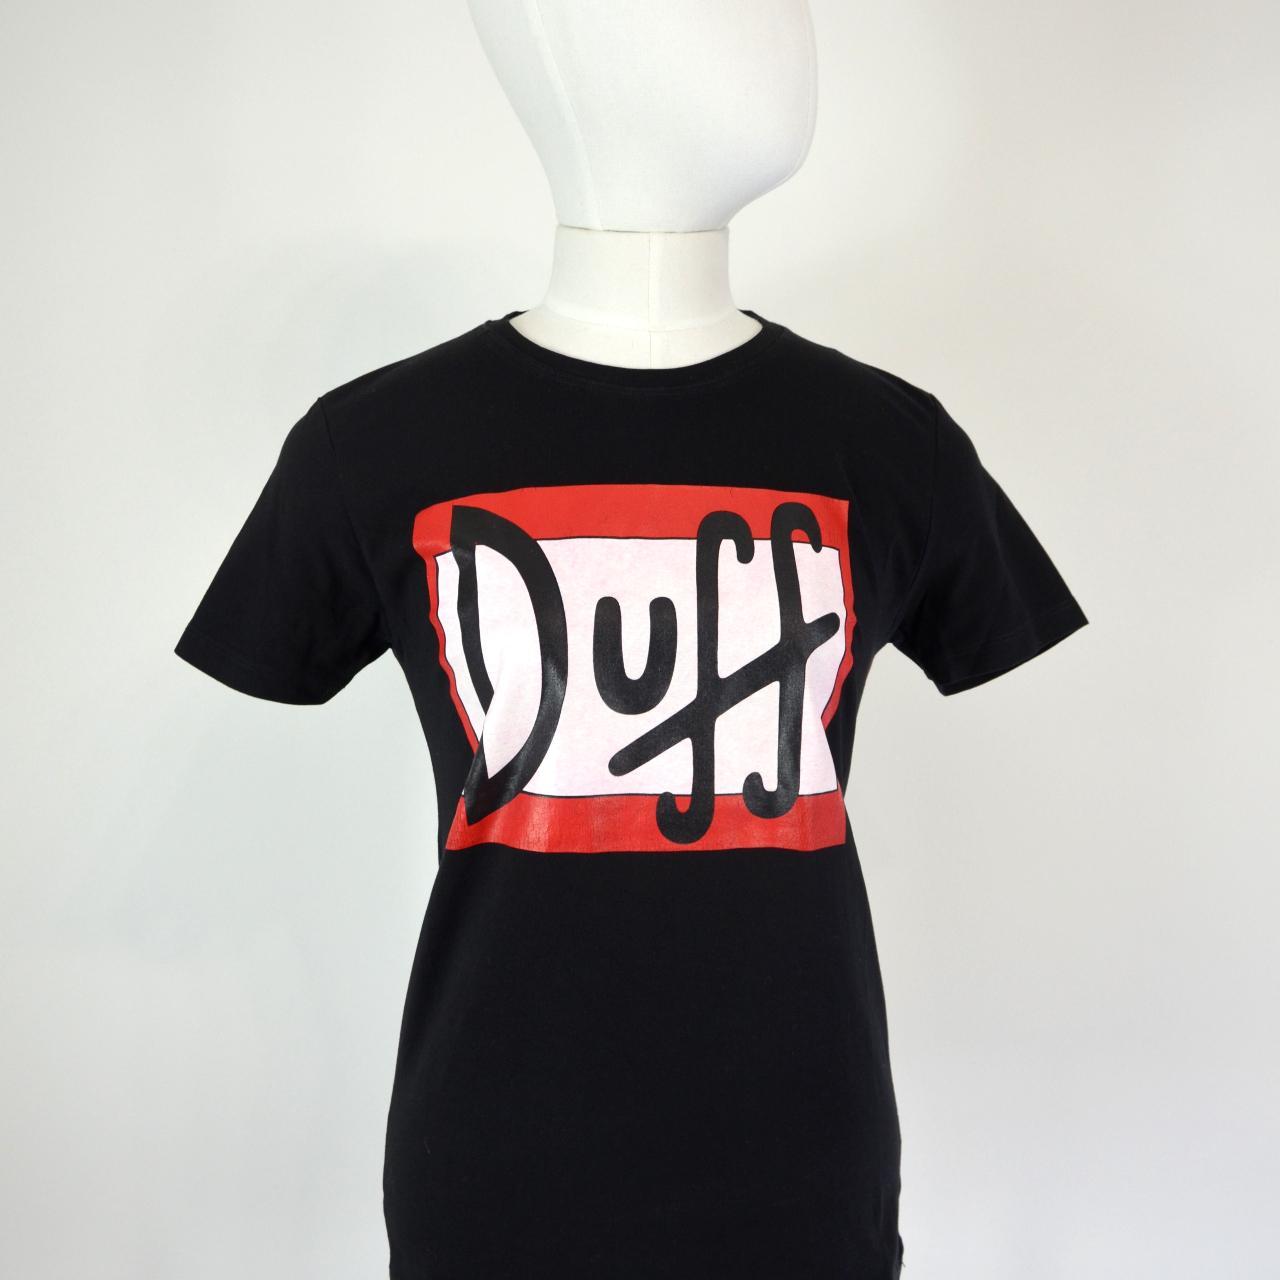 Product Image 1 - DUFF women's stretch T-shirt size